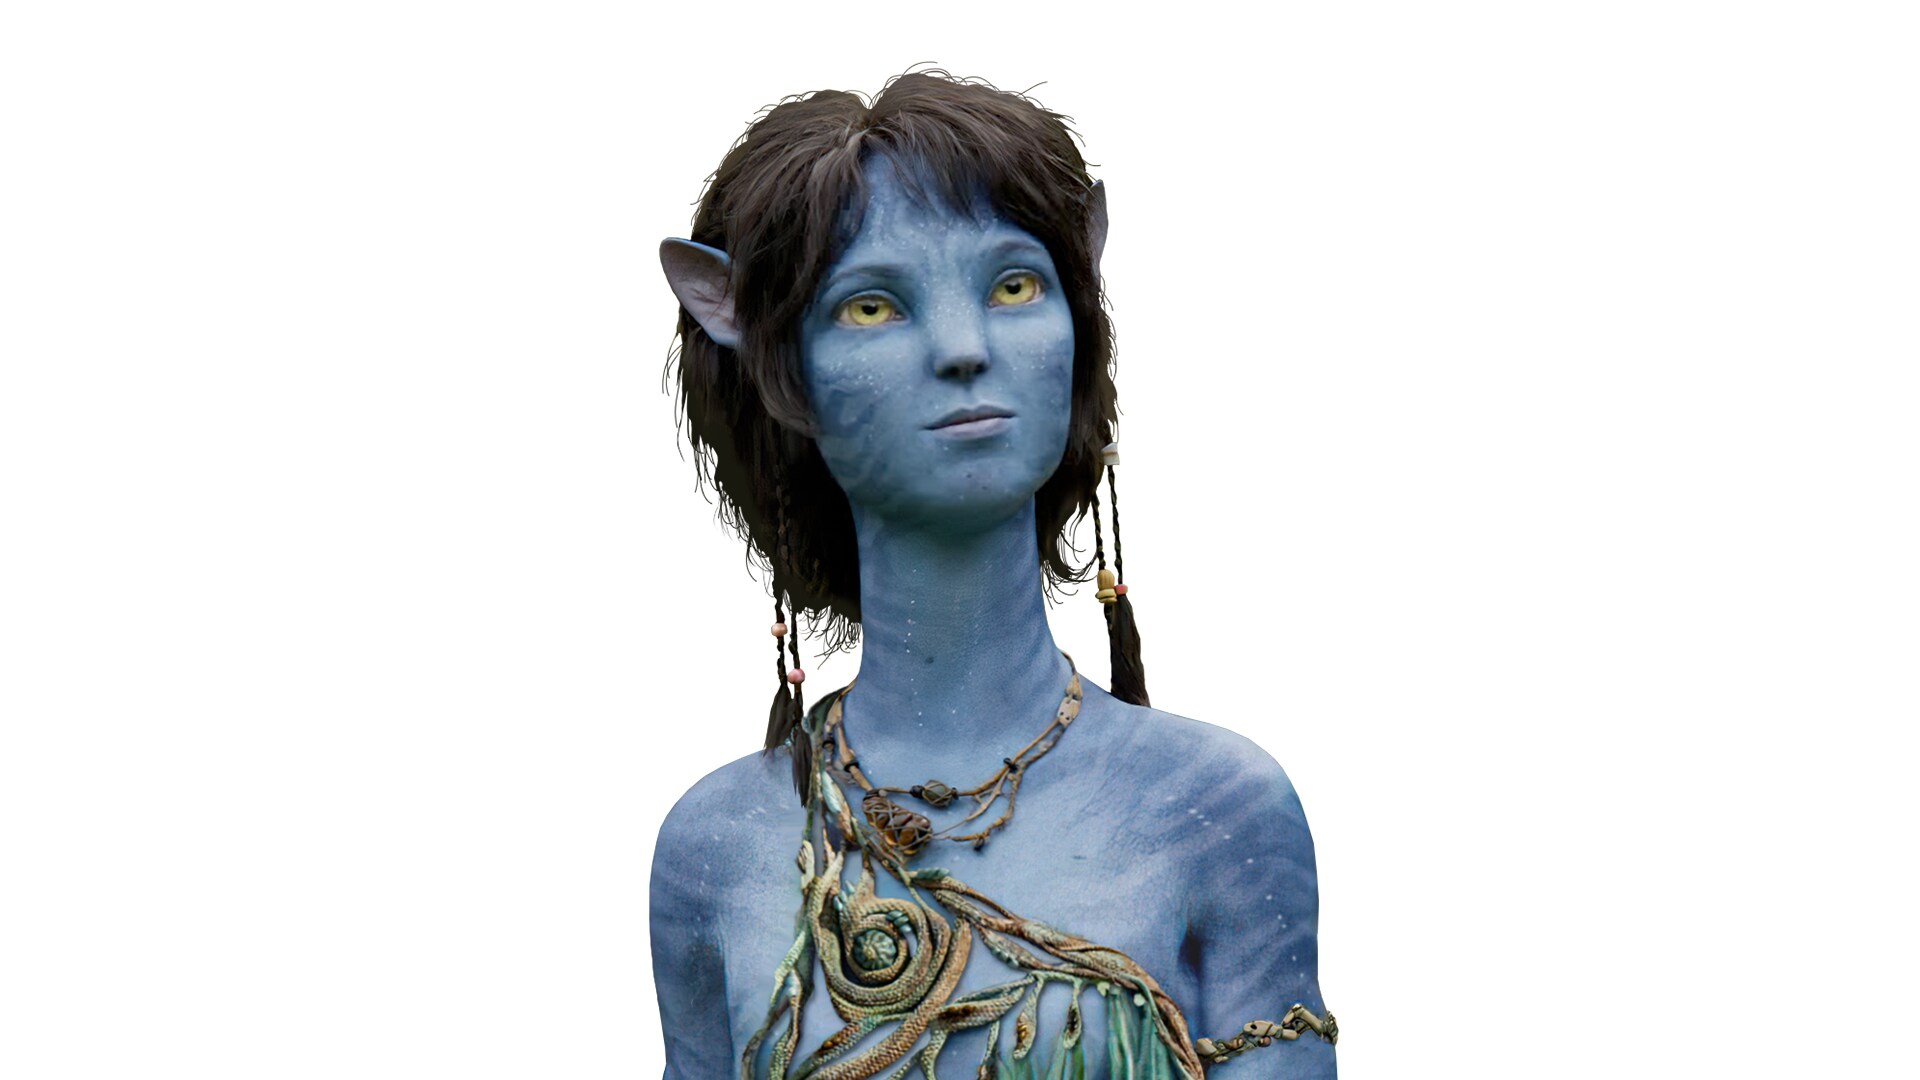 Avatar producer Jon Landau reveals the future Navi in the film franchise   Entertainment